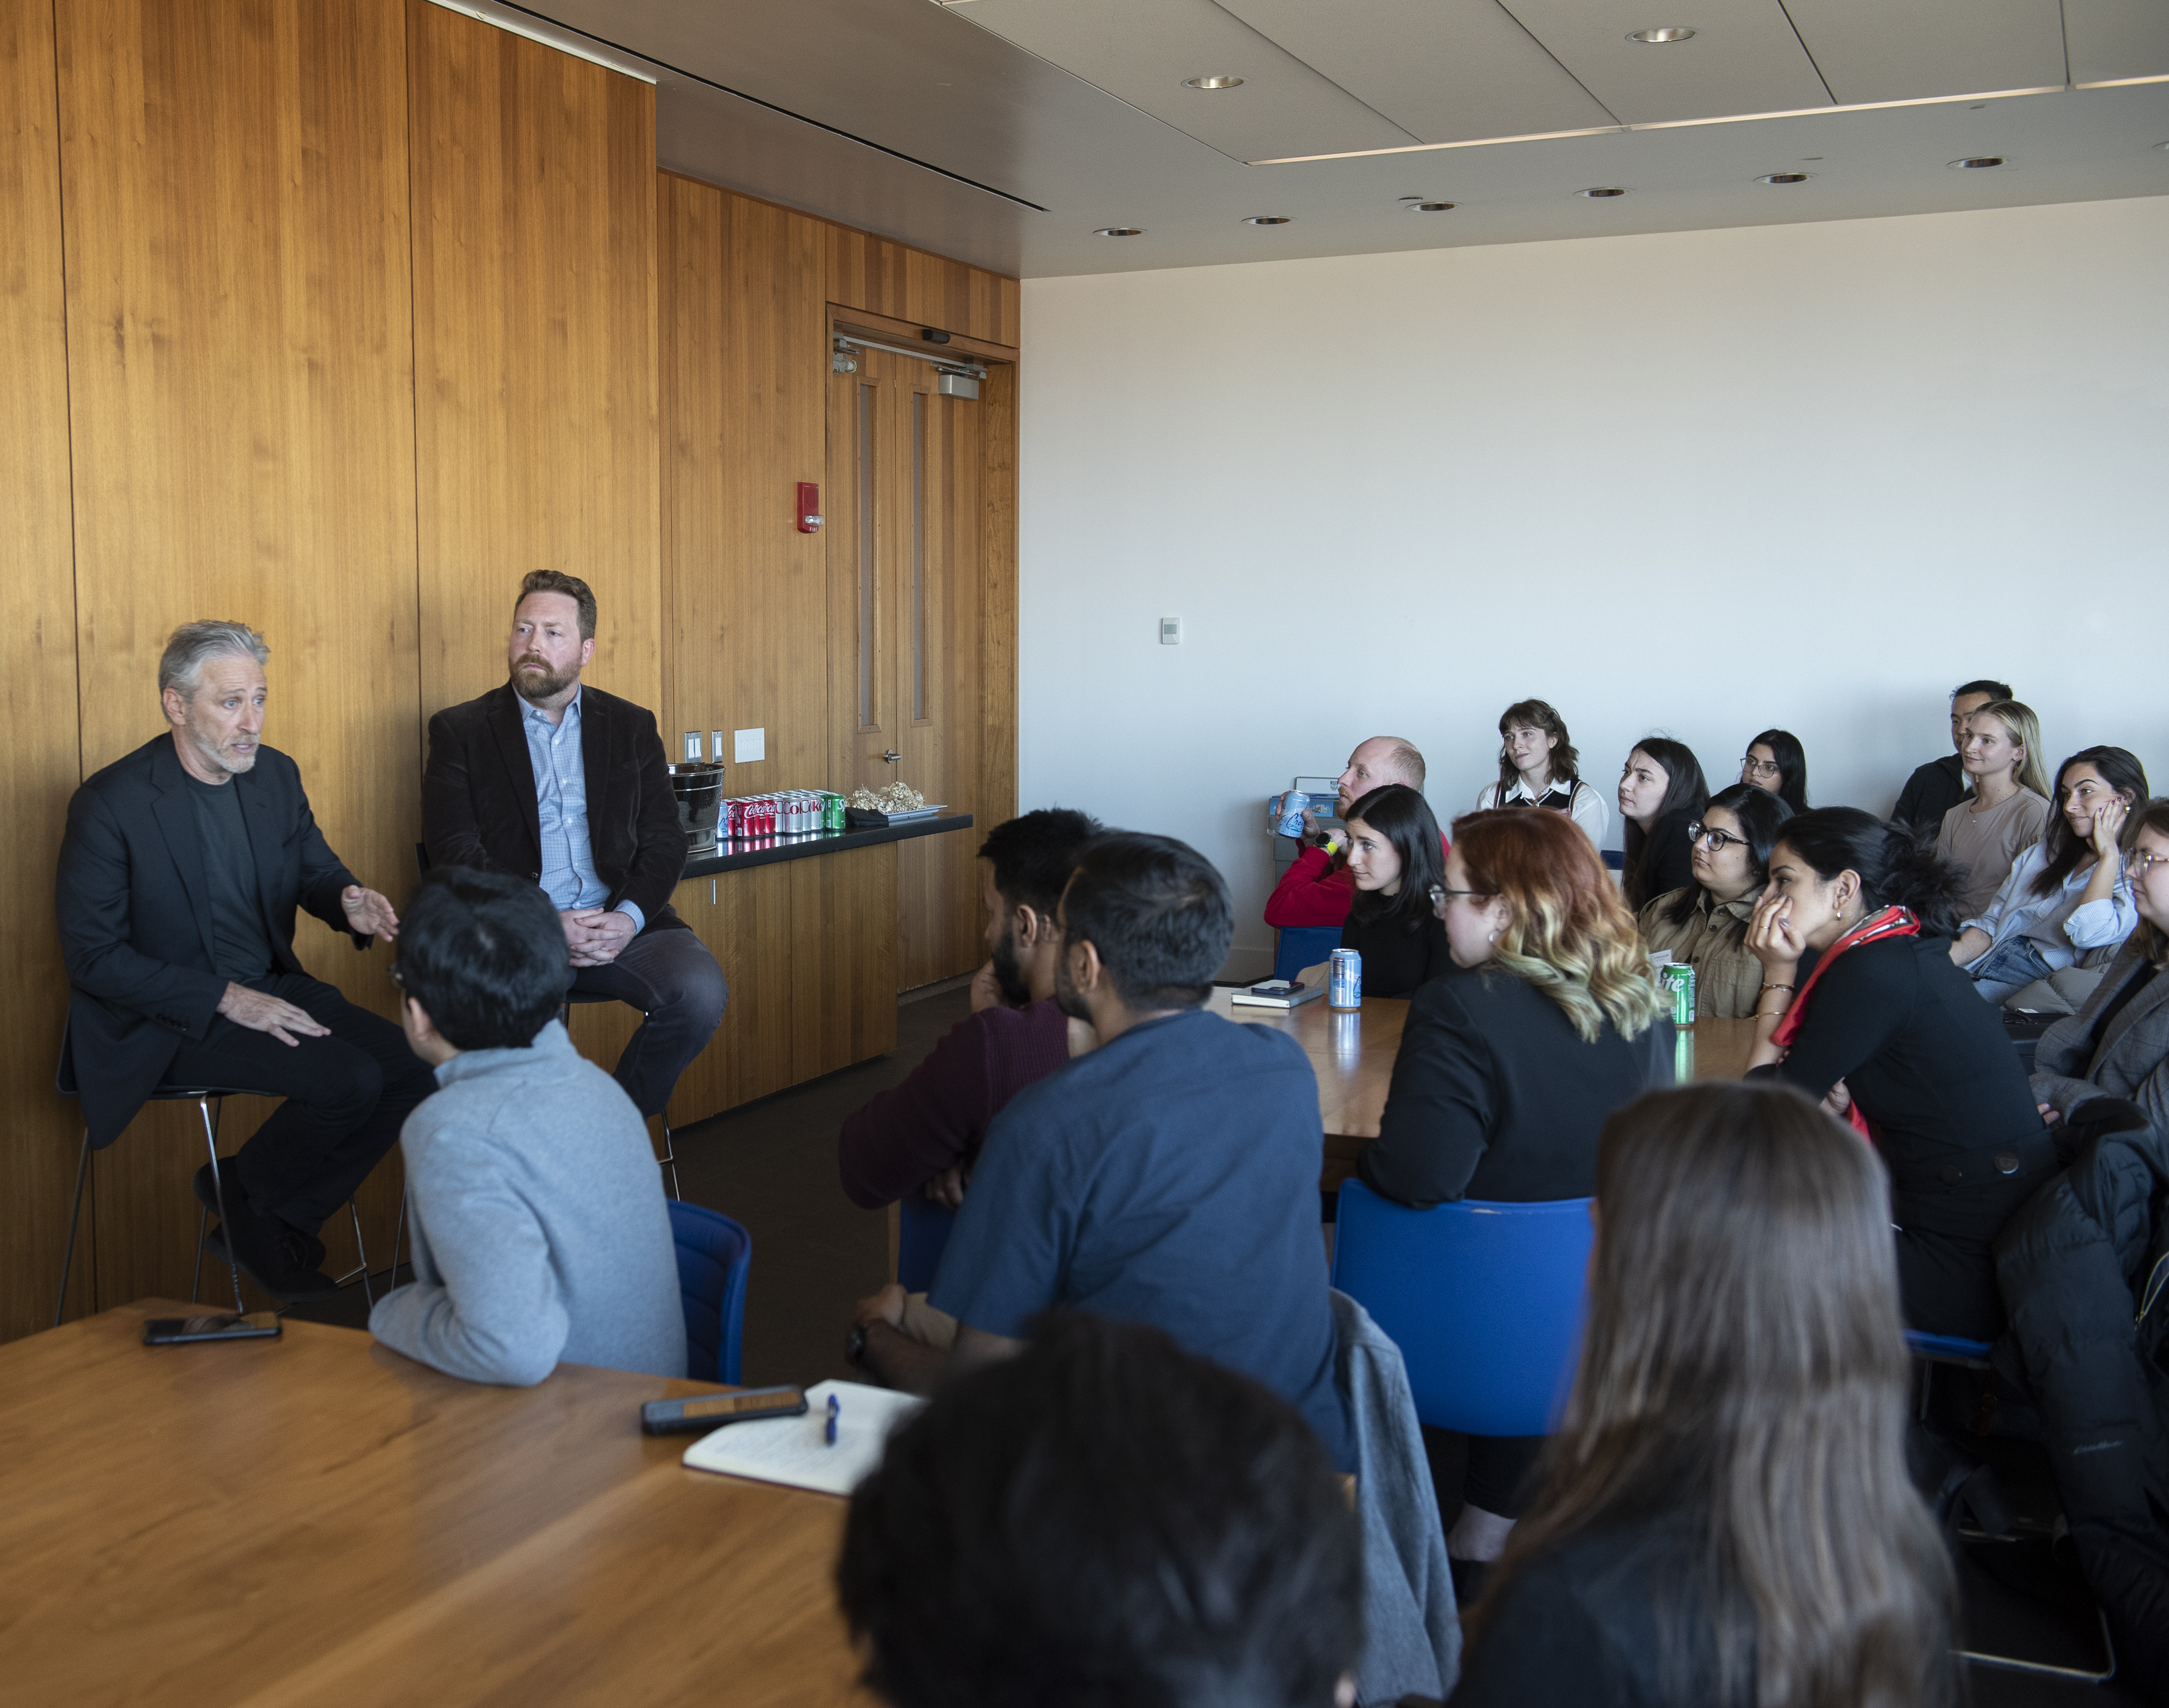 Jon Stewart and David Chrisinger speak with students